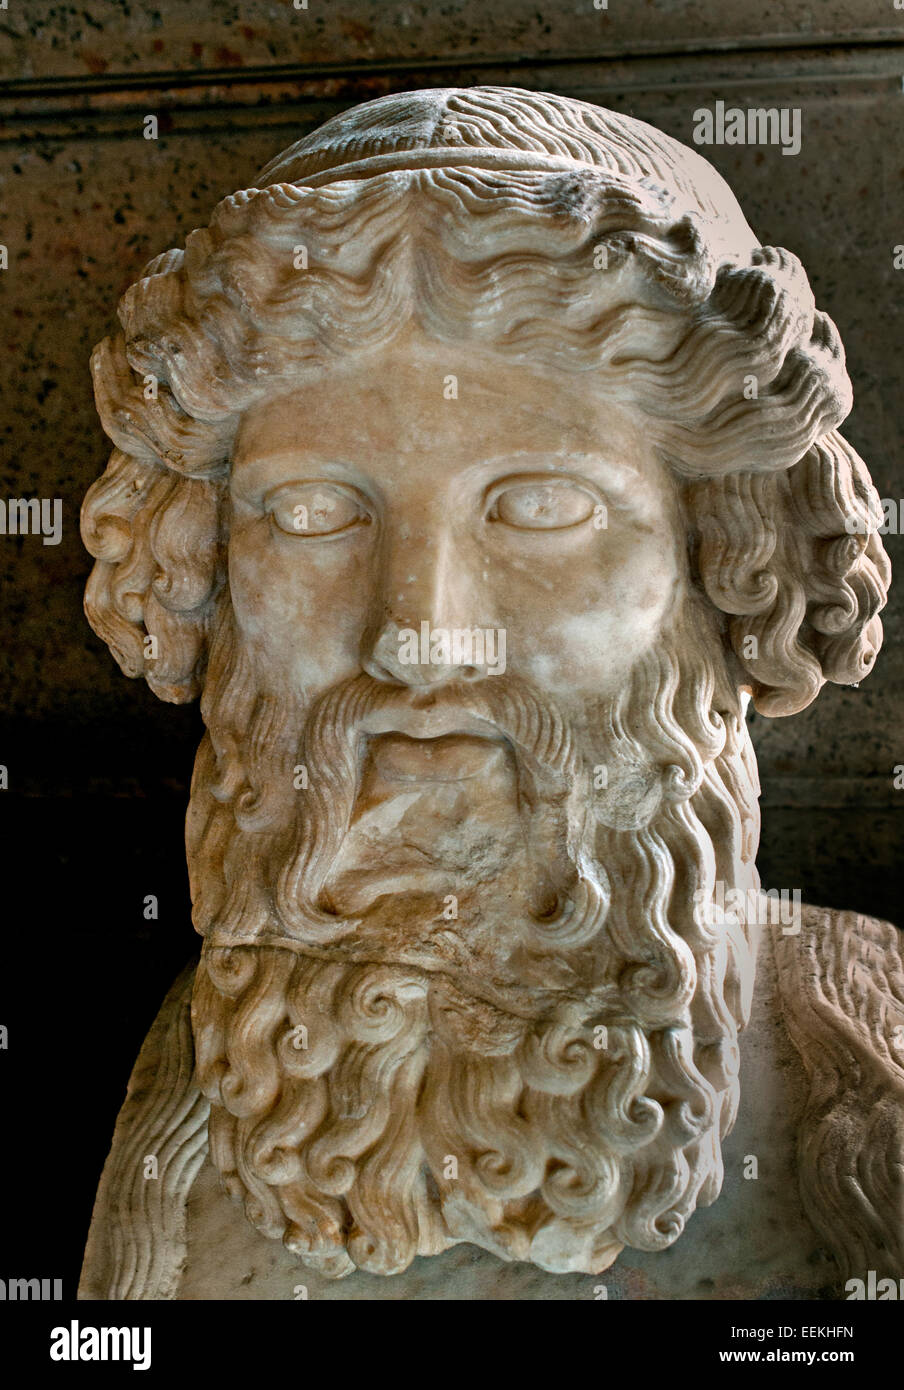 Plato 428/427 – 348/347 BCE  Greek Rome Capitoline Museum Italy Italian Stock Photo